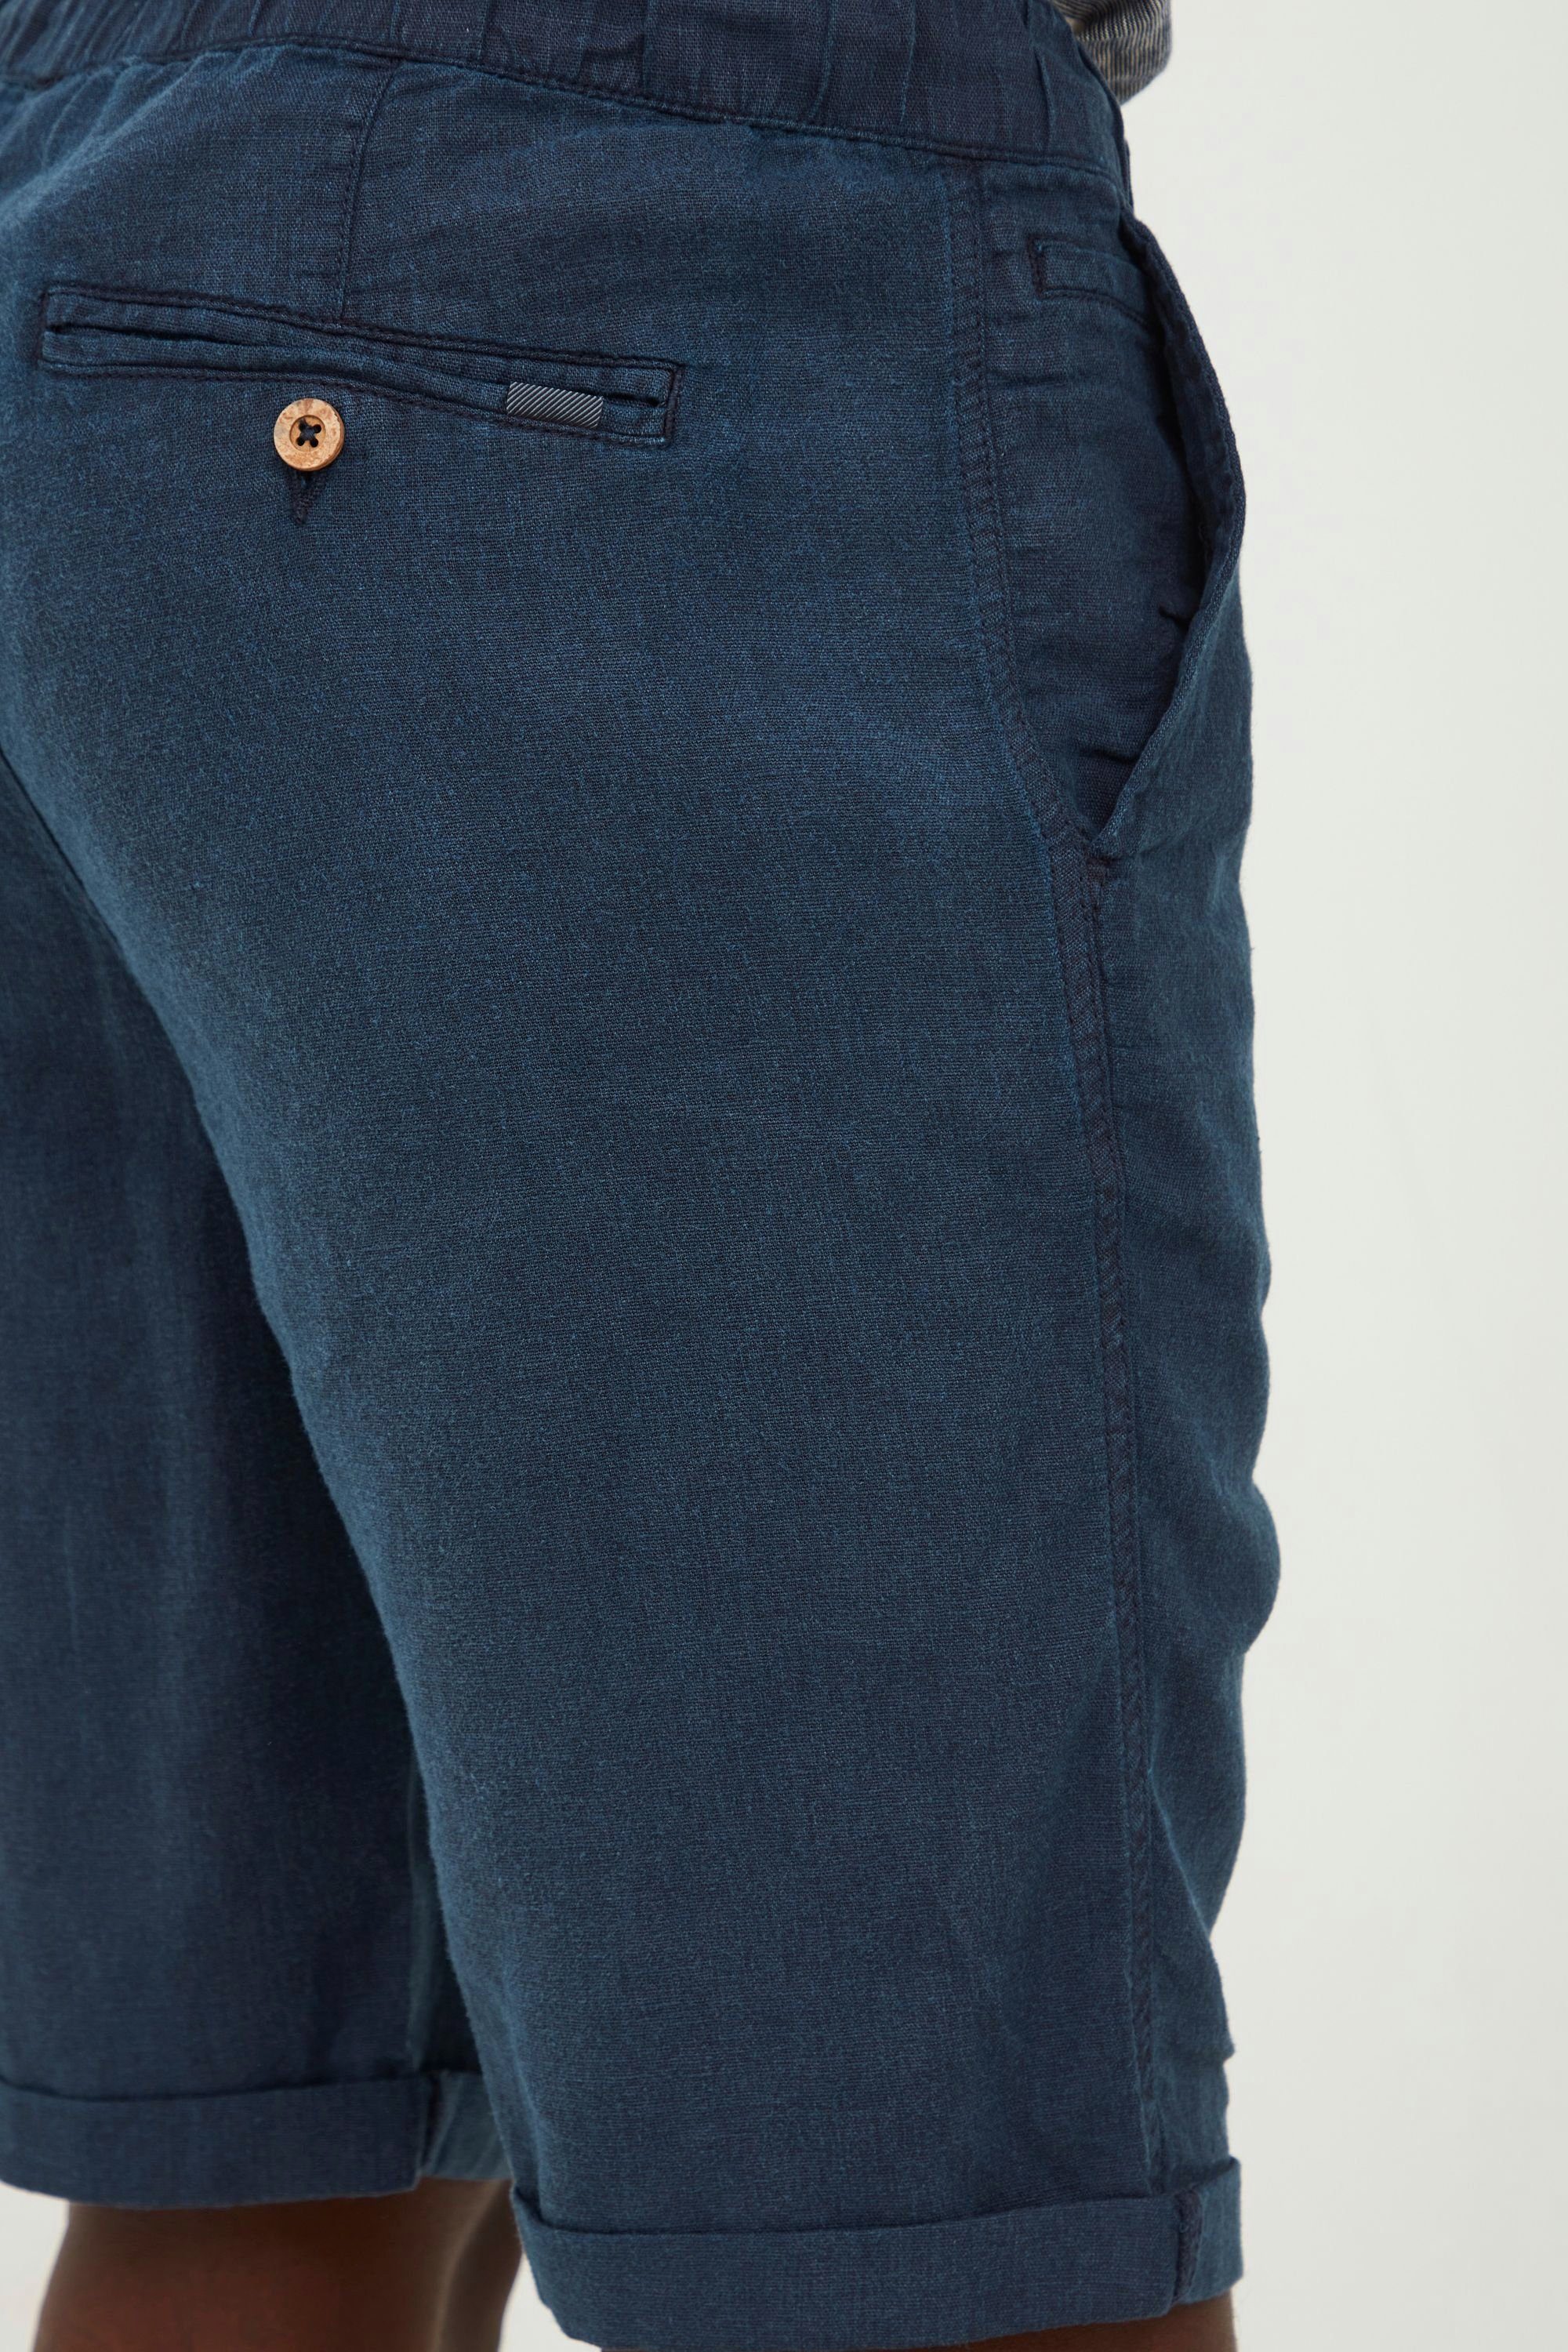 Hose Shorts (194010) !Solid INSIGNIA Leinen - SDTruc Shorts Linen kurze BLUE 21105213 aus